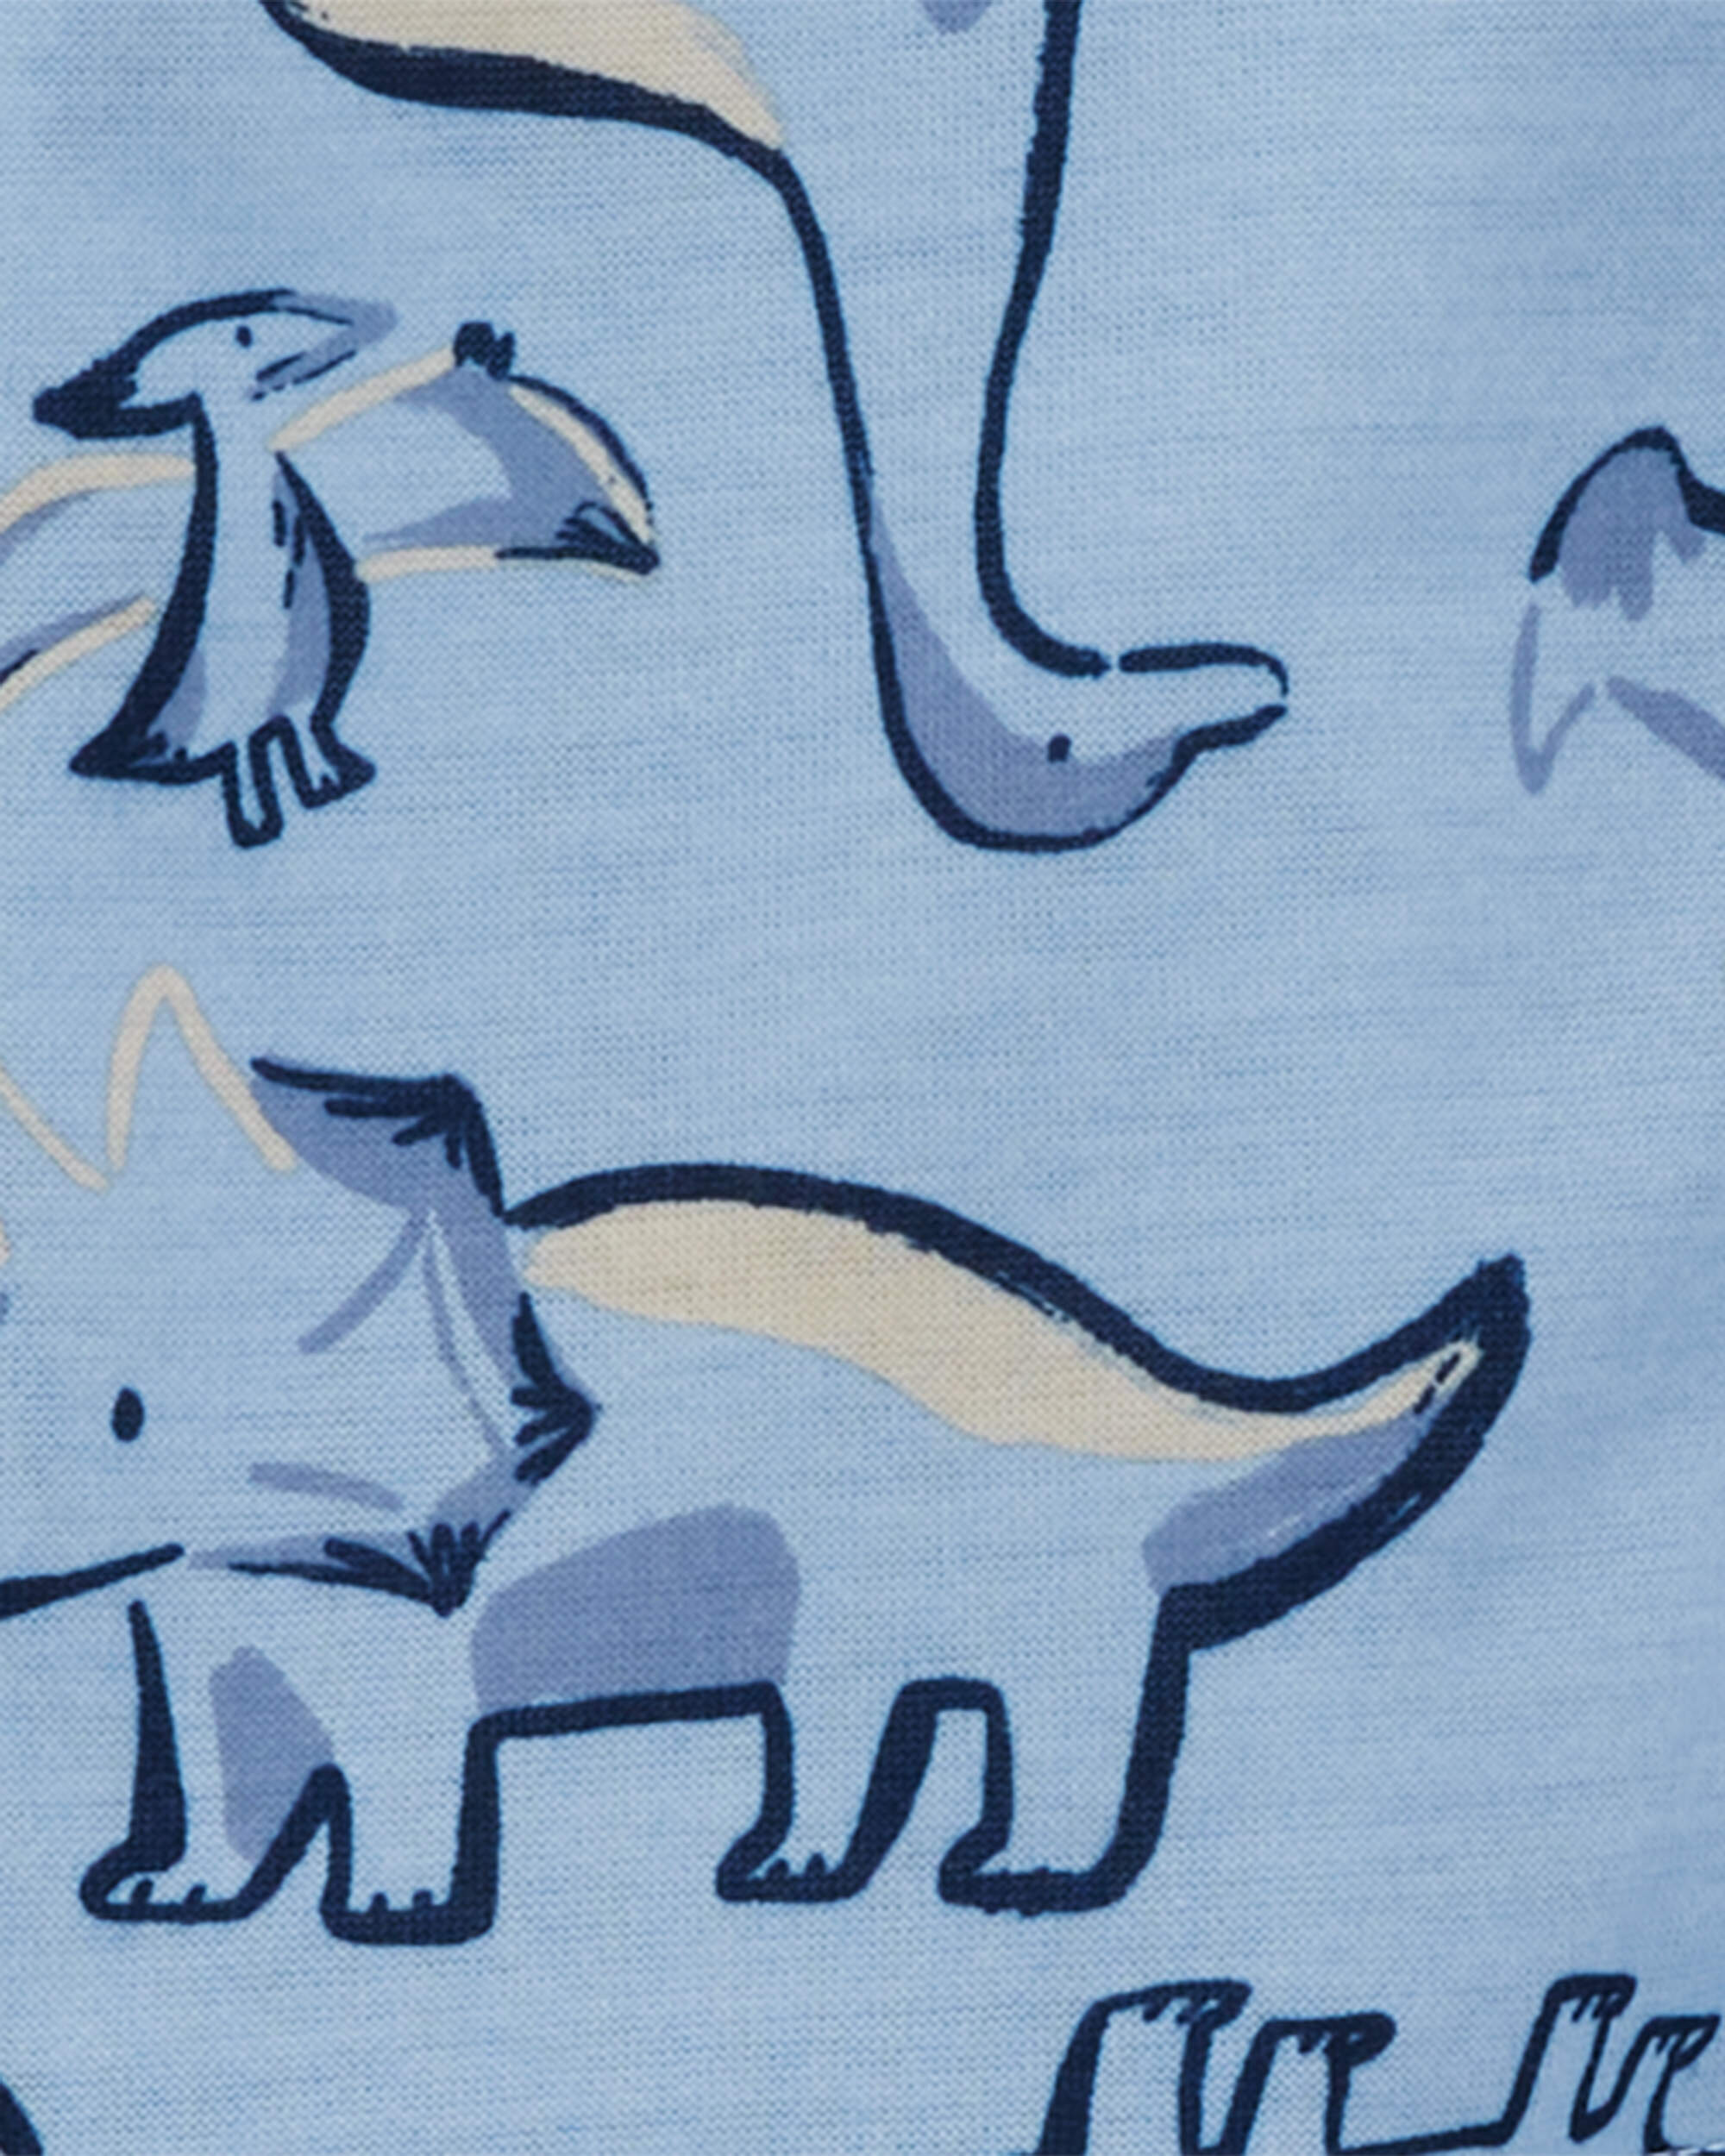 Toddler 2-Piece Dinosaur Coat-Style Pyjama Set